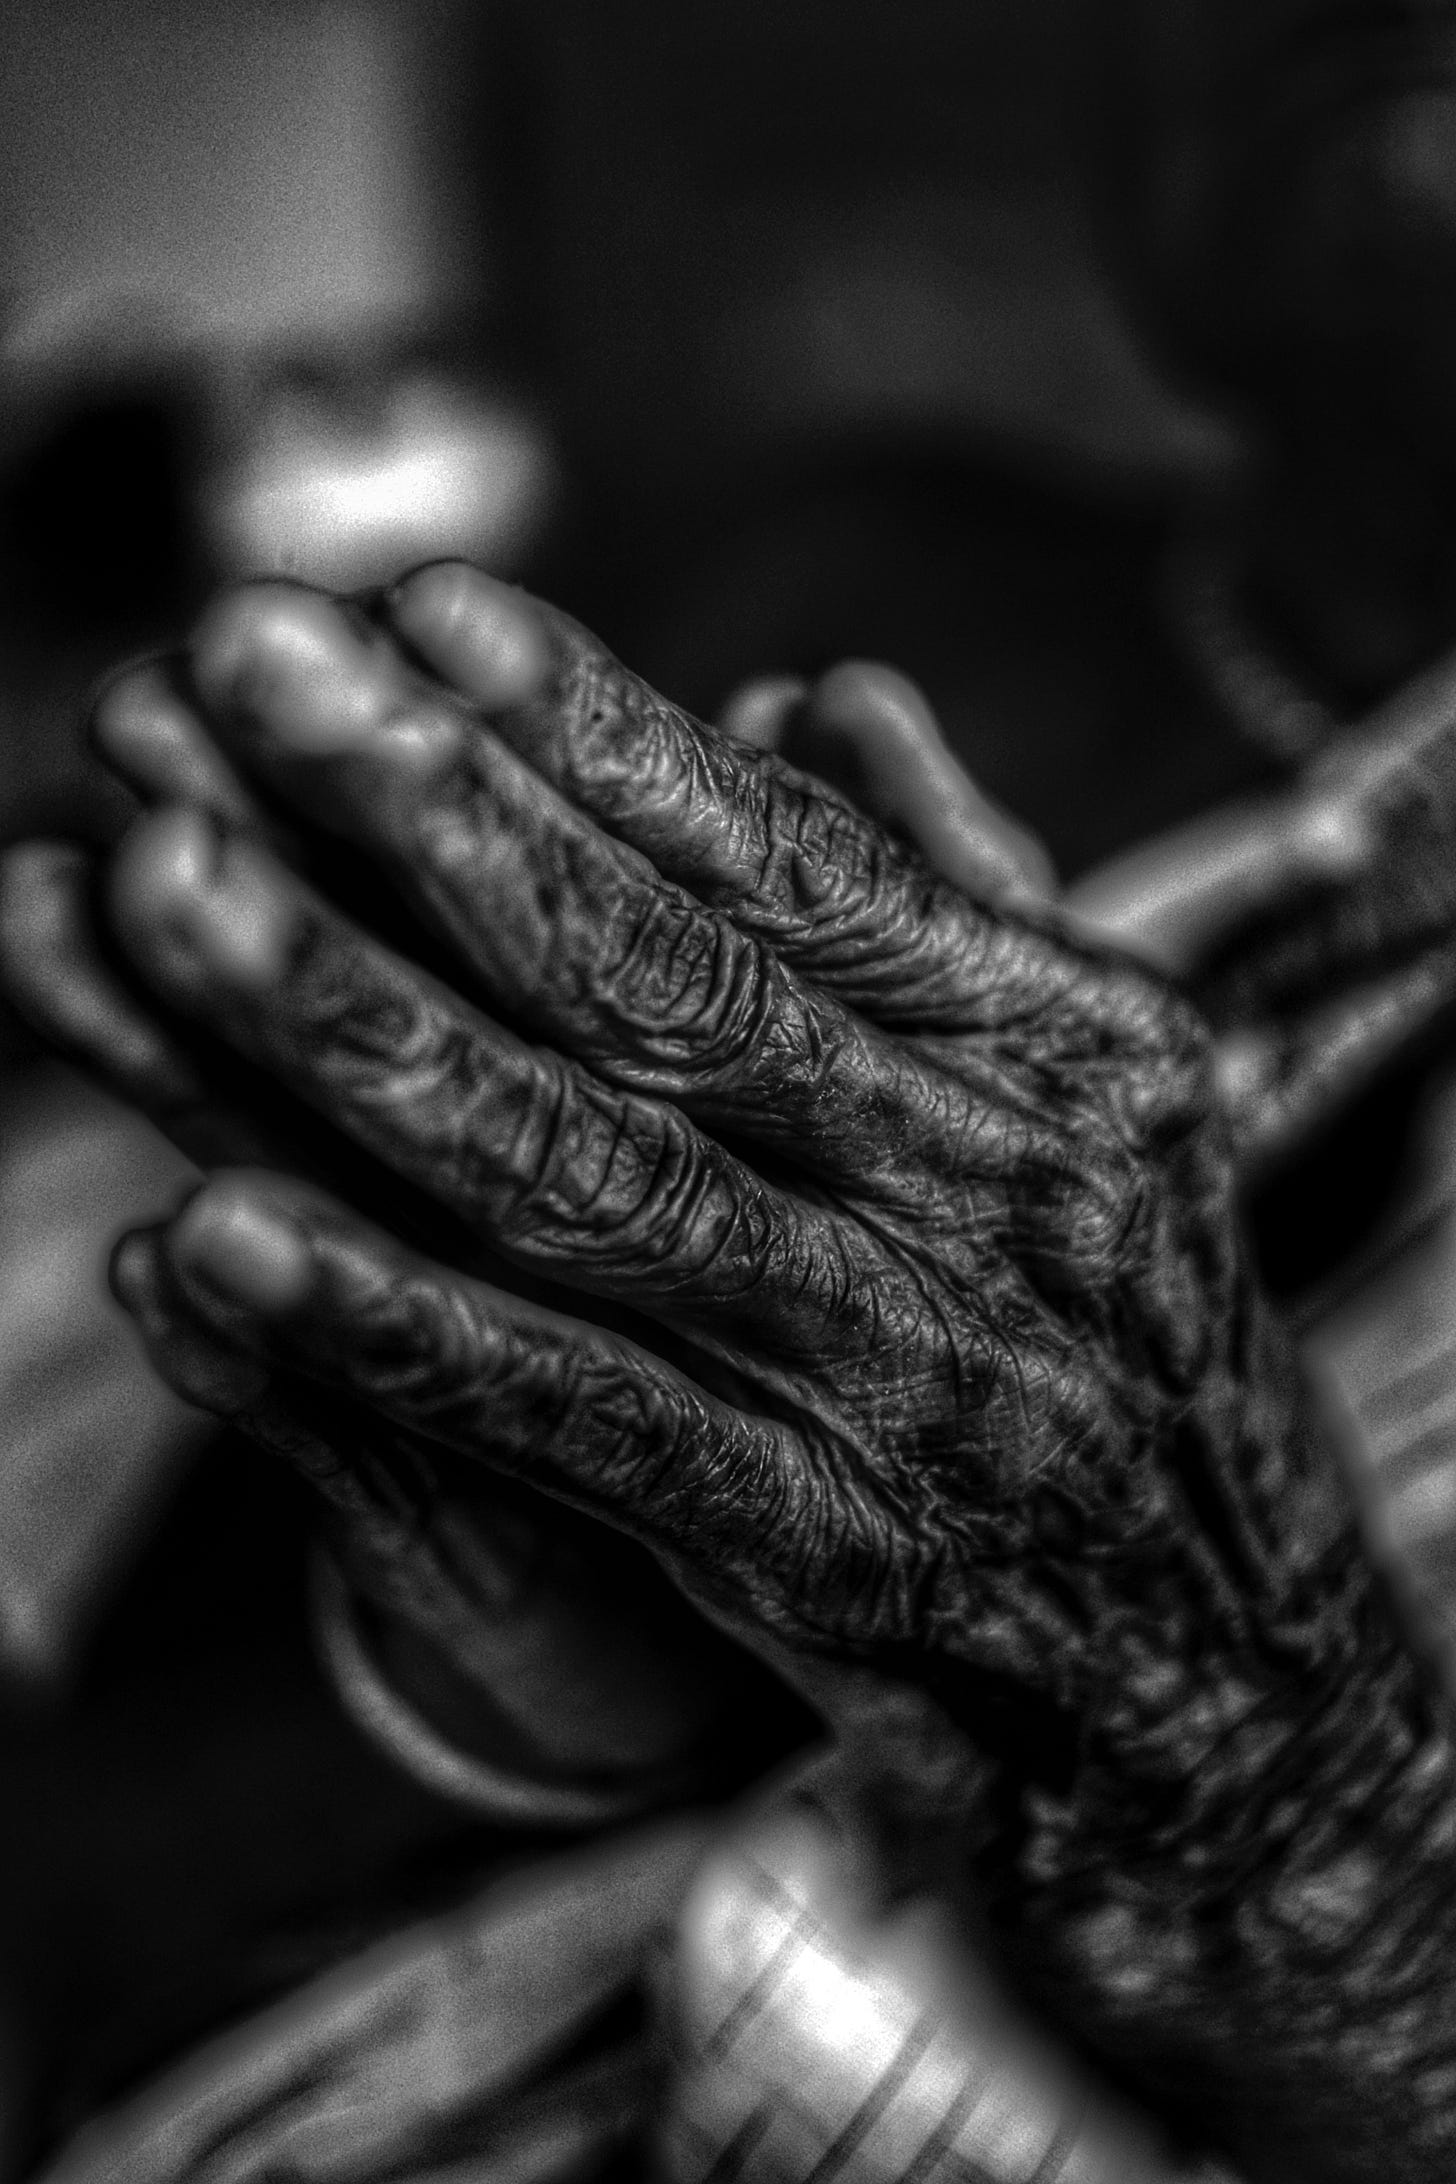 Aged praying hands